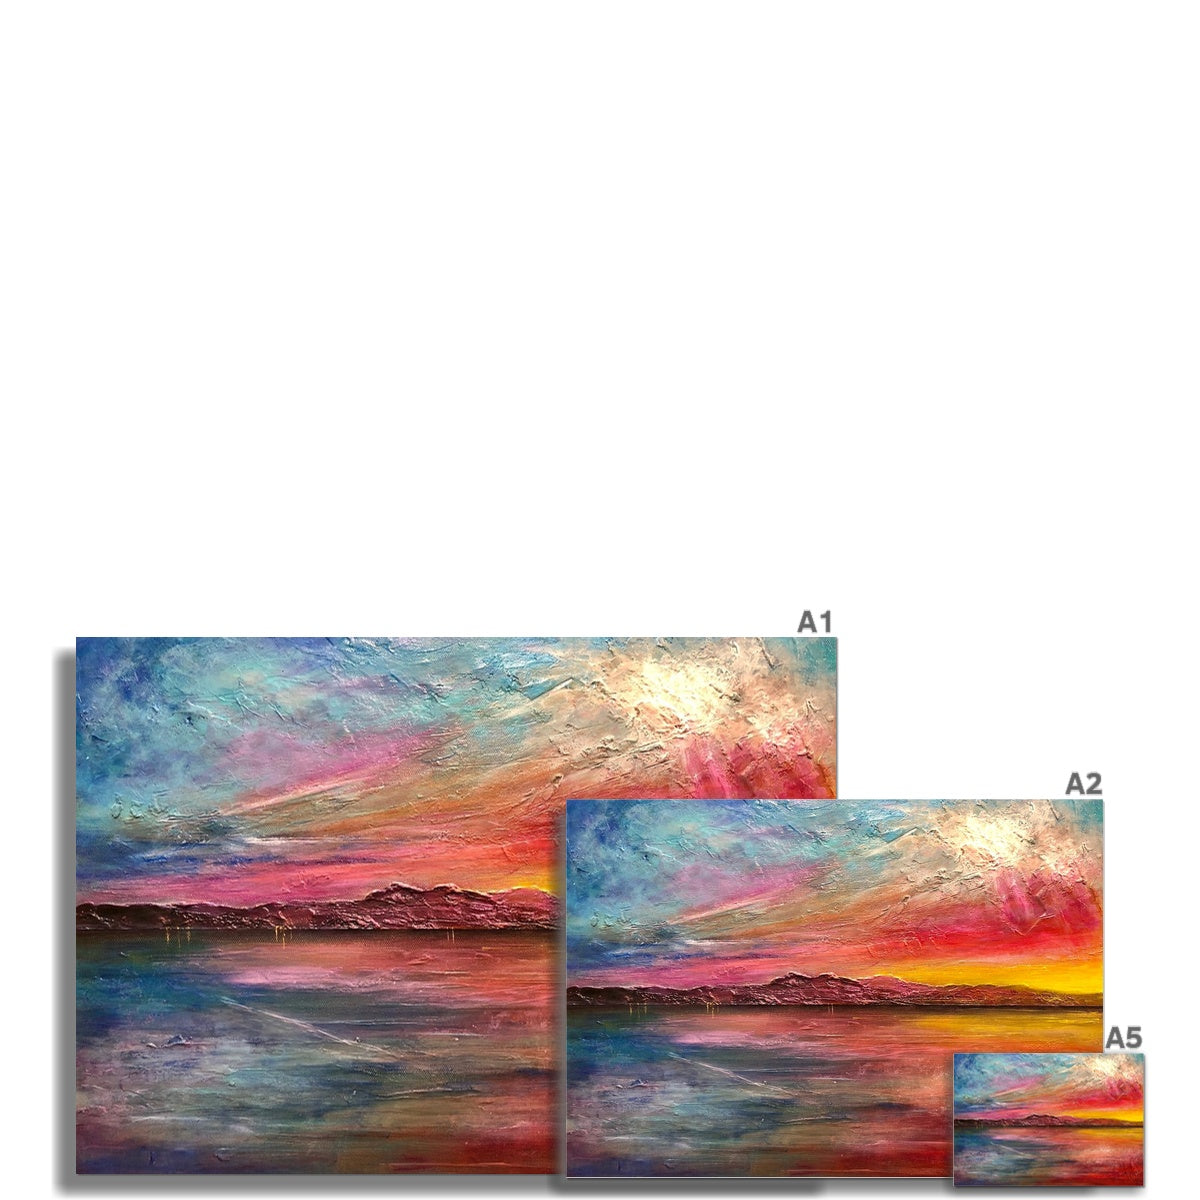 Arran Sunset ii Painting | Fine Art Prints From Scotland-Unframed Prints-Arran Art Gallery-Paintings, Prints, Homeware, Art Gifts From Scotland By Scottish Artist Kevin Hunter